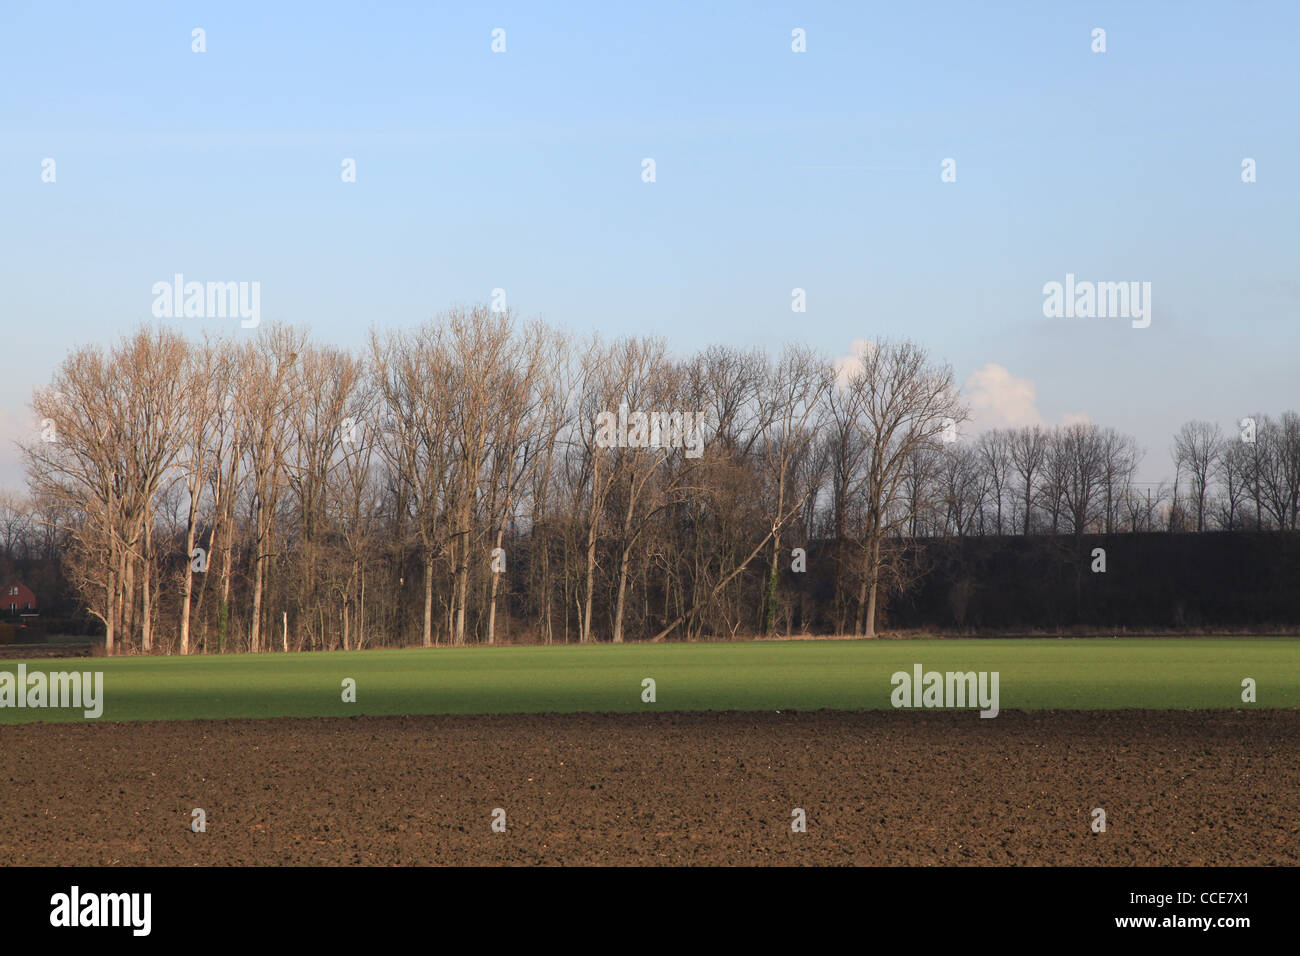 Feld, Acker, grün, Natur, Landwirtschaft, Ackerfurche, Lehmboden, Baüme, Bauer, Sonnenschein, blauer Himmel, braun, grau, Winter Stock Photo